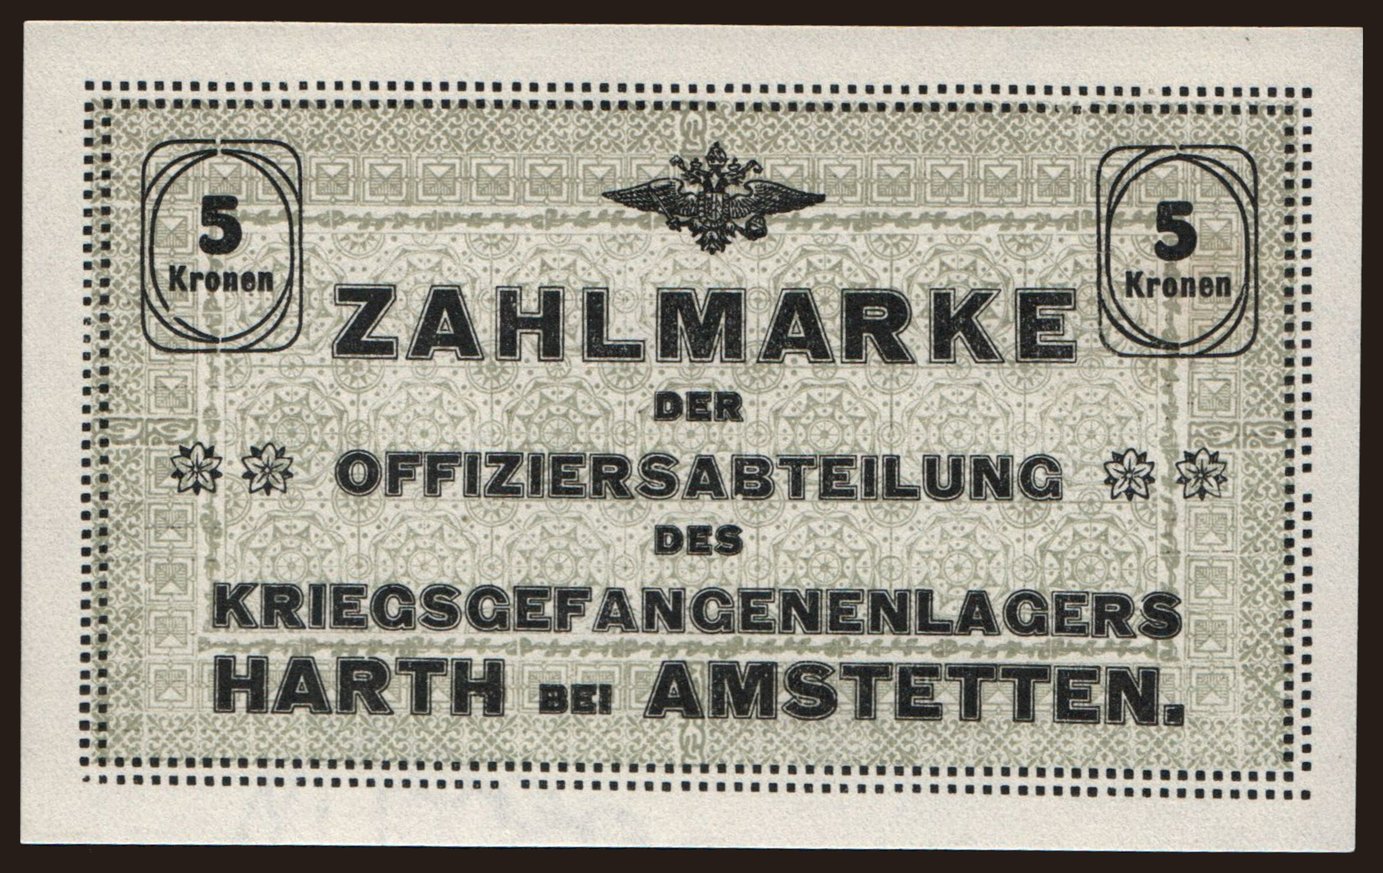 Harth bei Amstetten, 5 Kronen, 1914